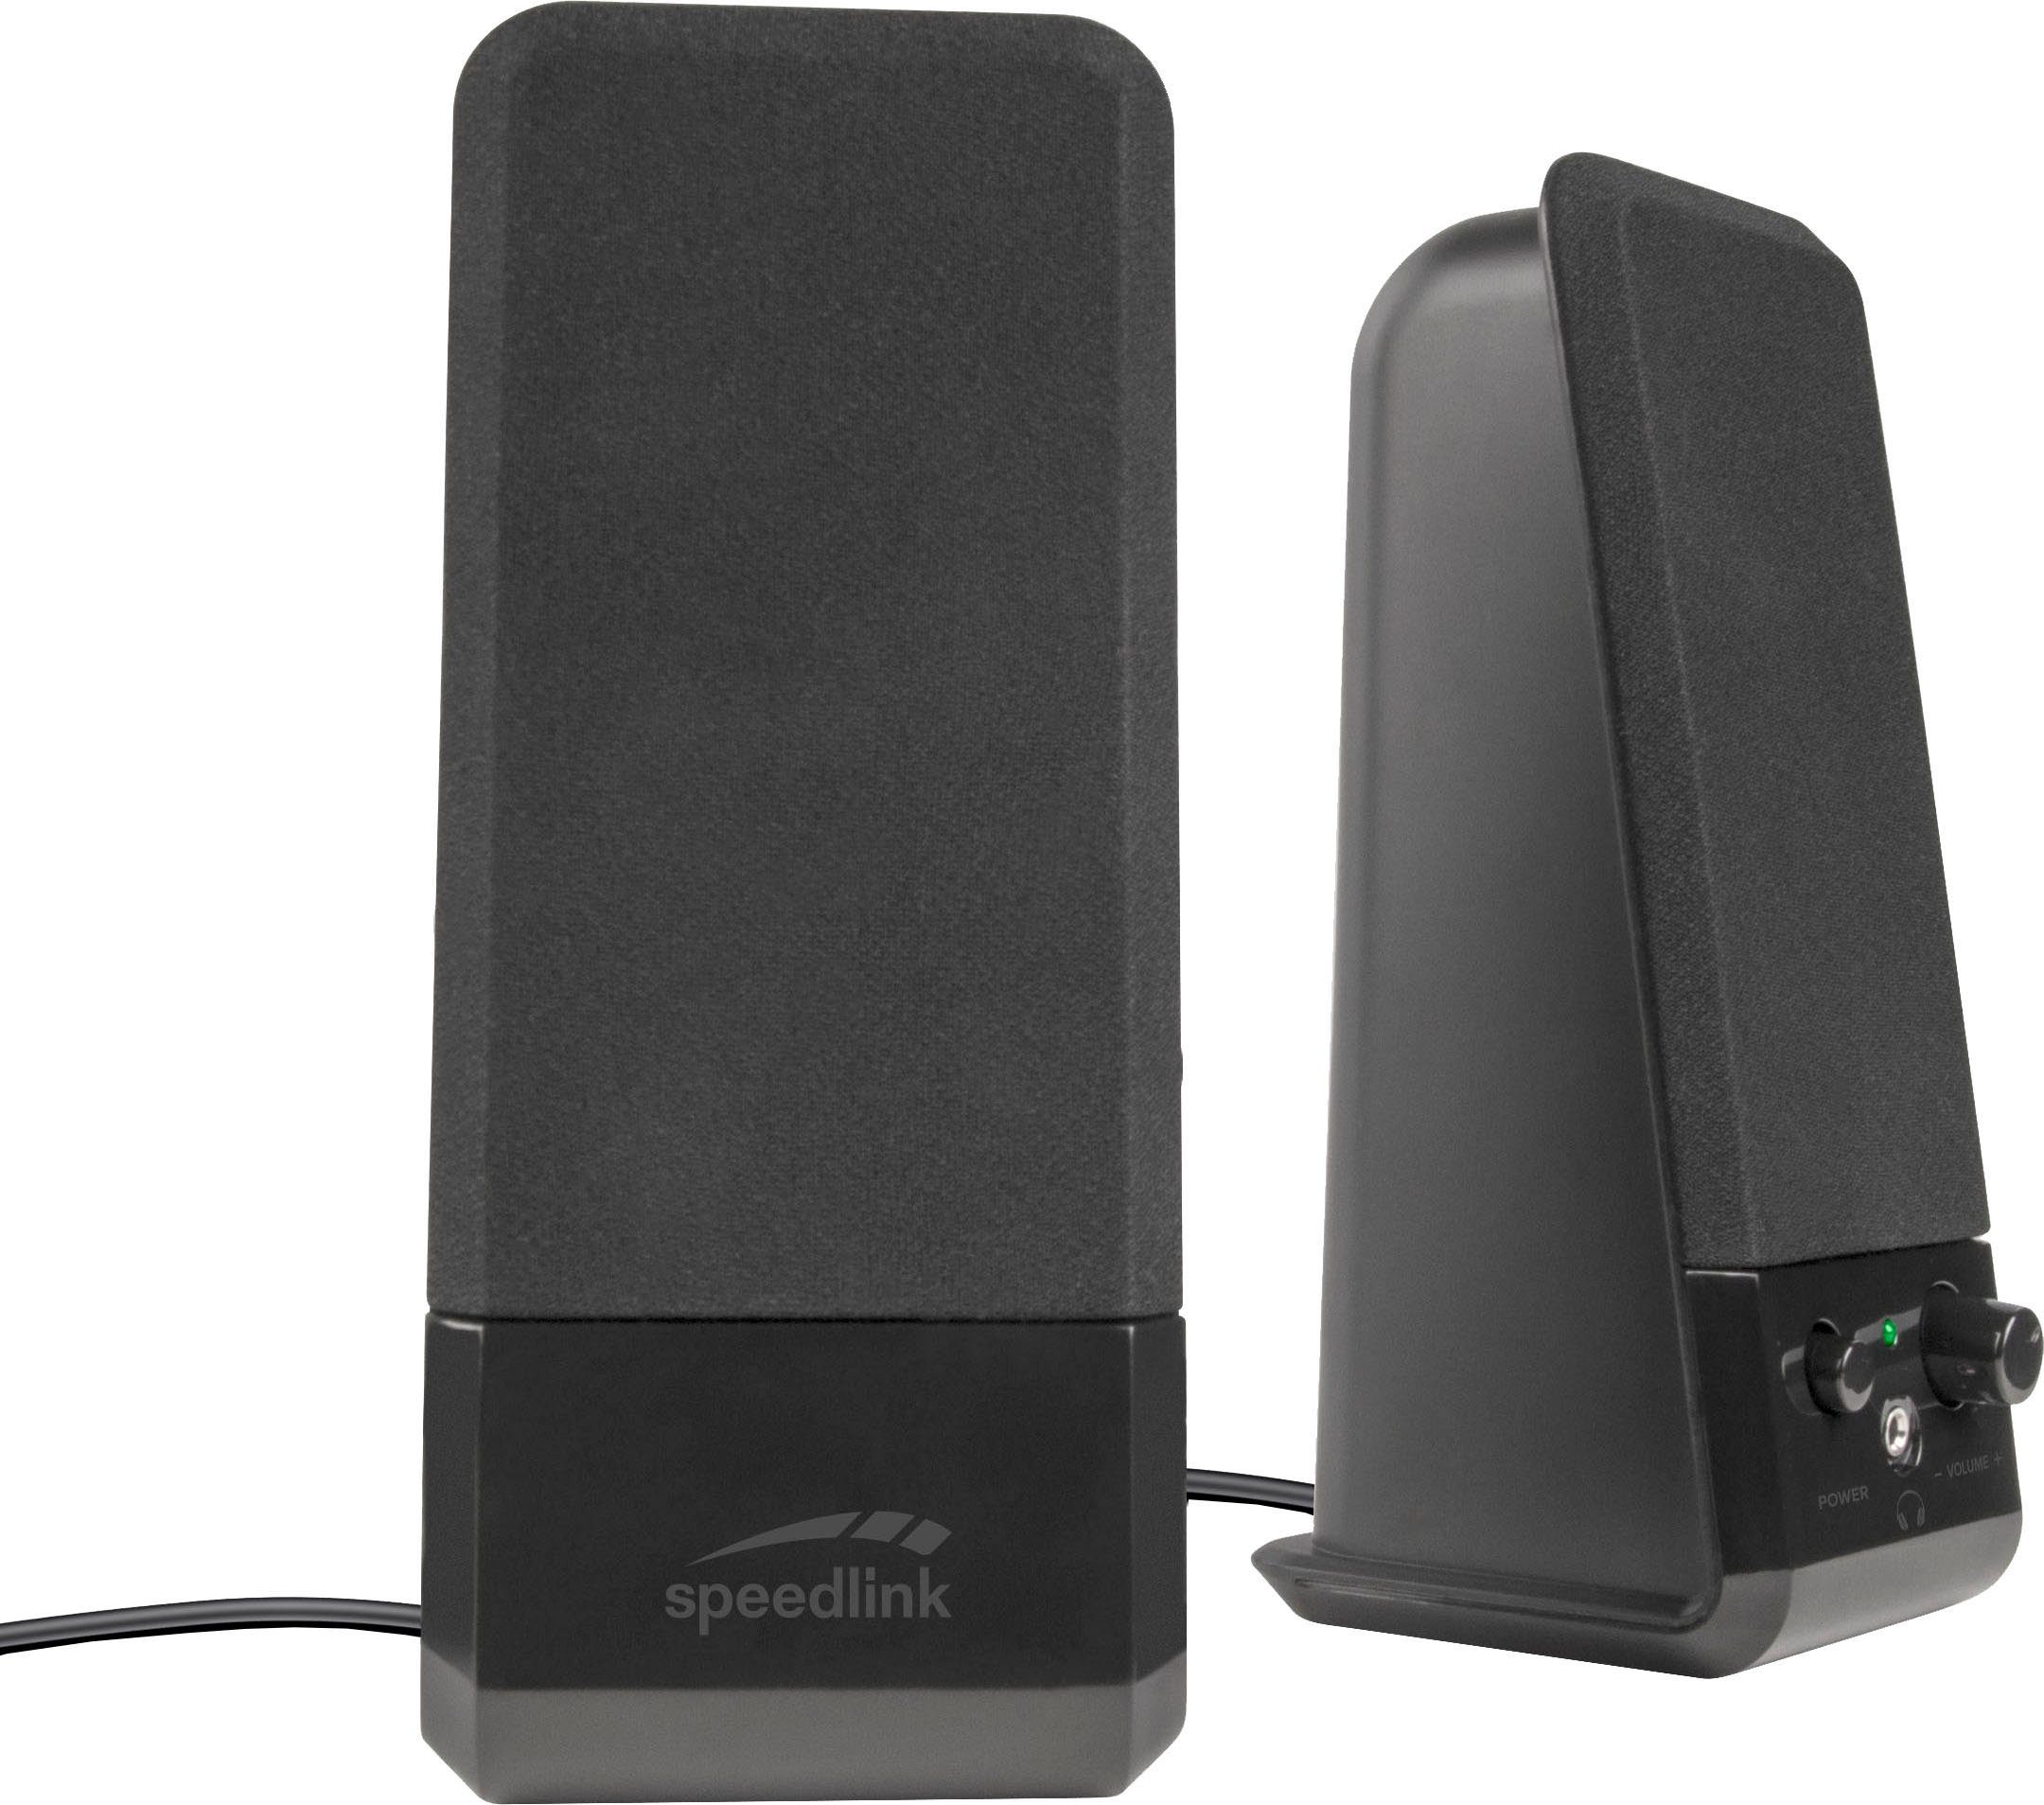 Speedlink EVENT Stereo W) PC-Lautsprecher (5